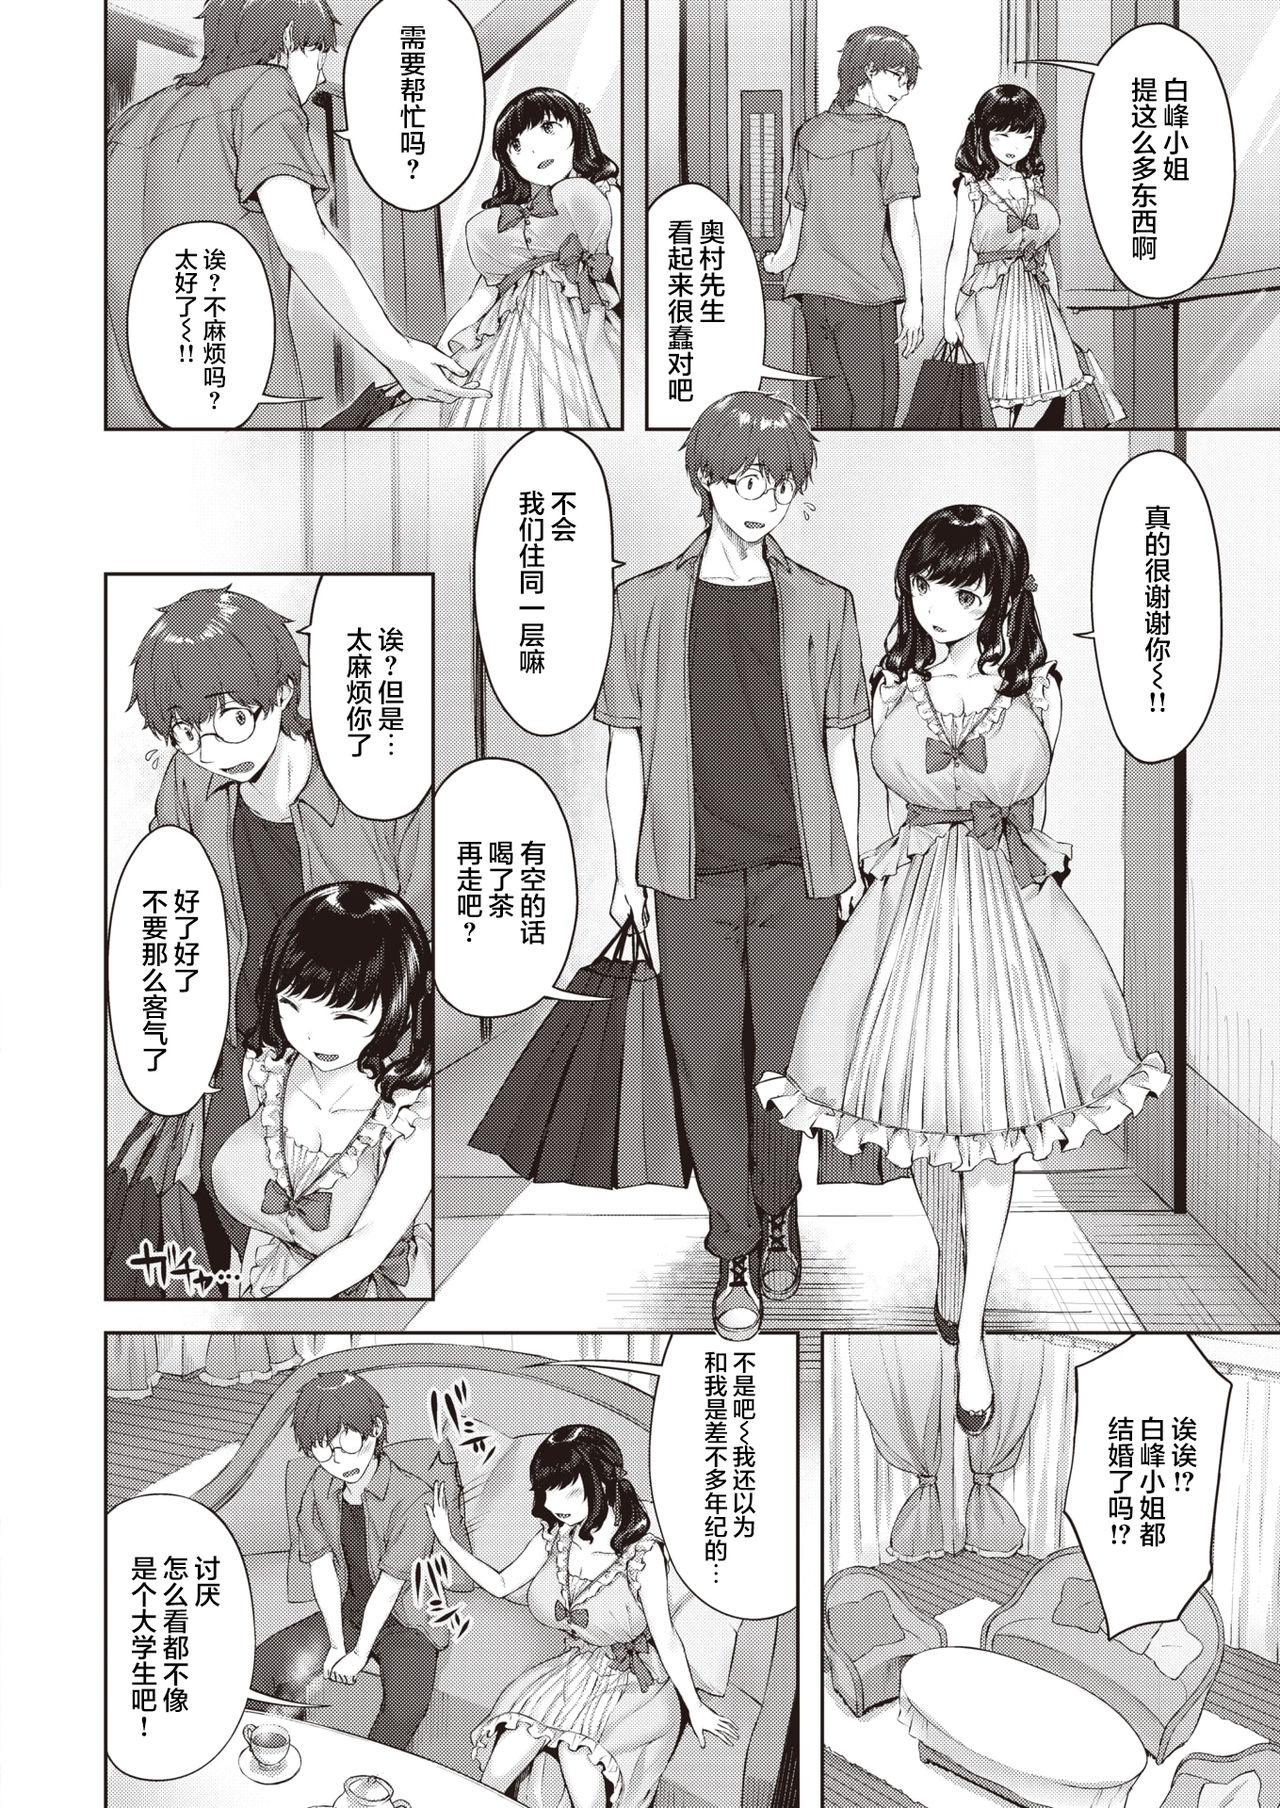 Spanking Nyanko to Asobo Closeups - Page 3